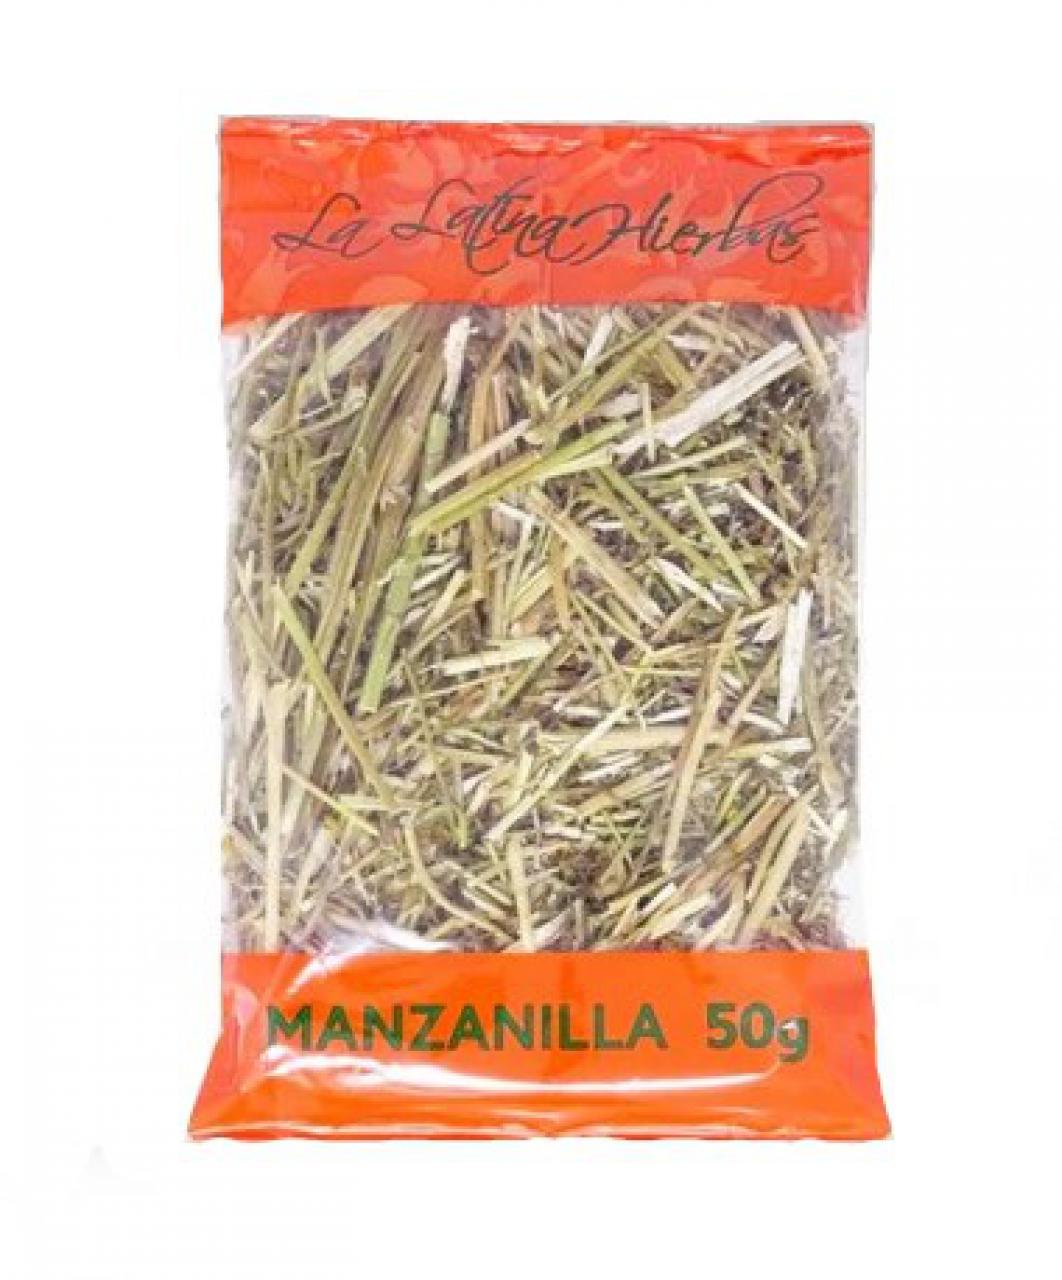 La latina erbe manzanilla